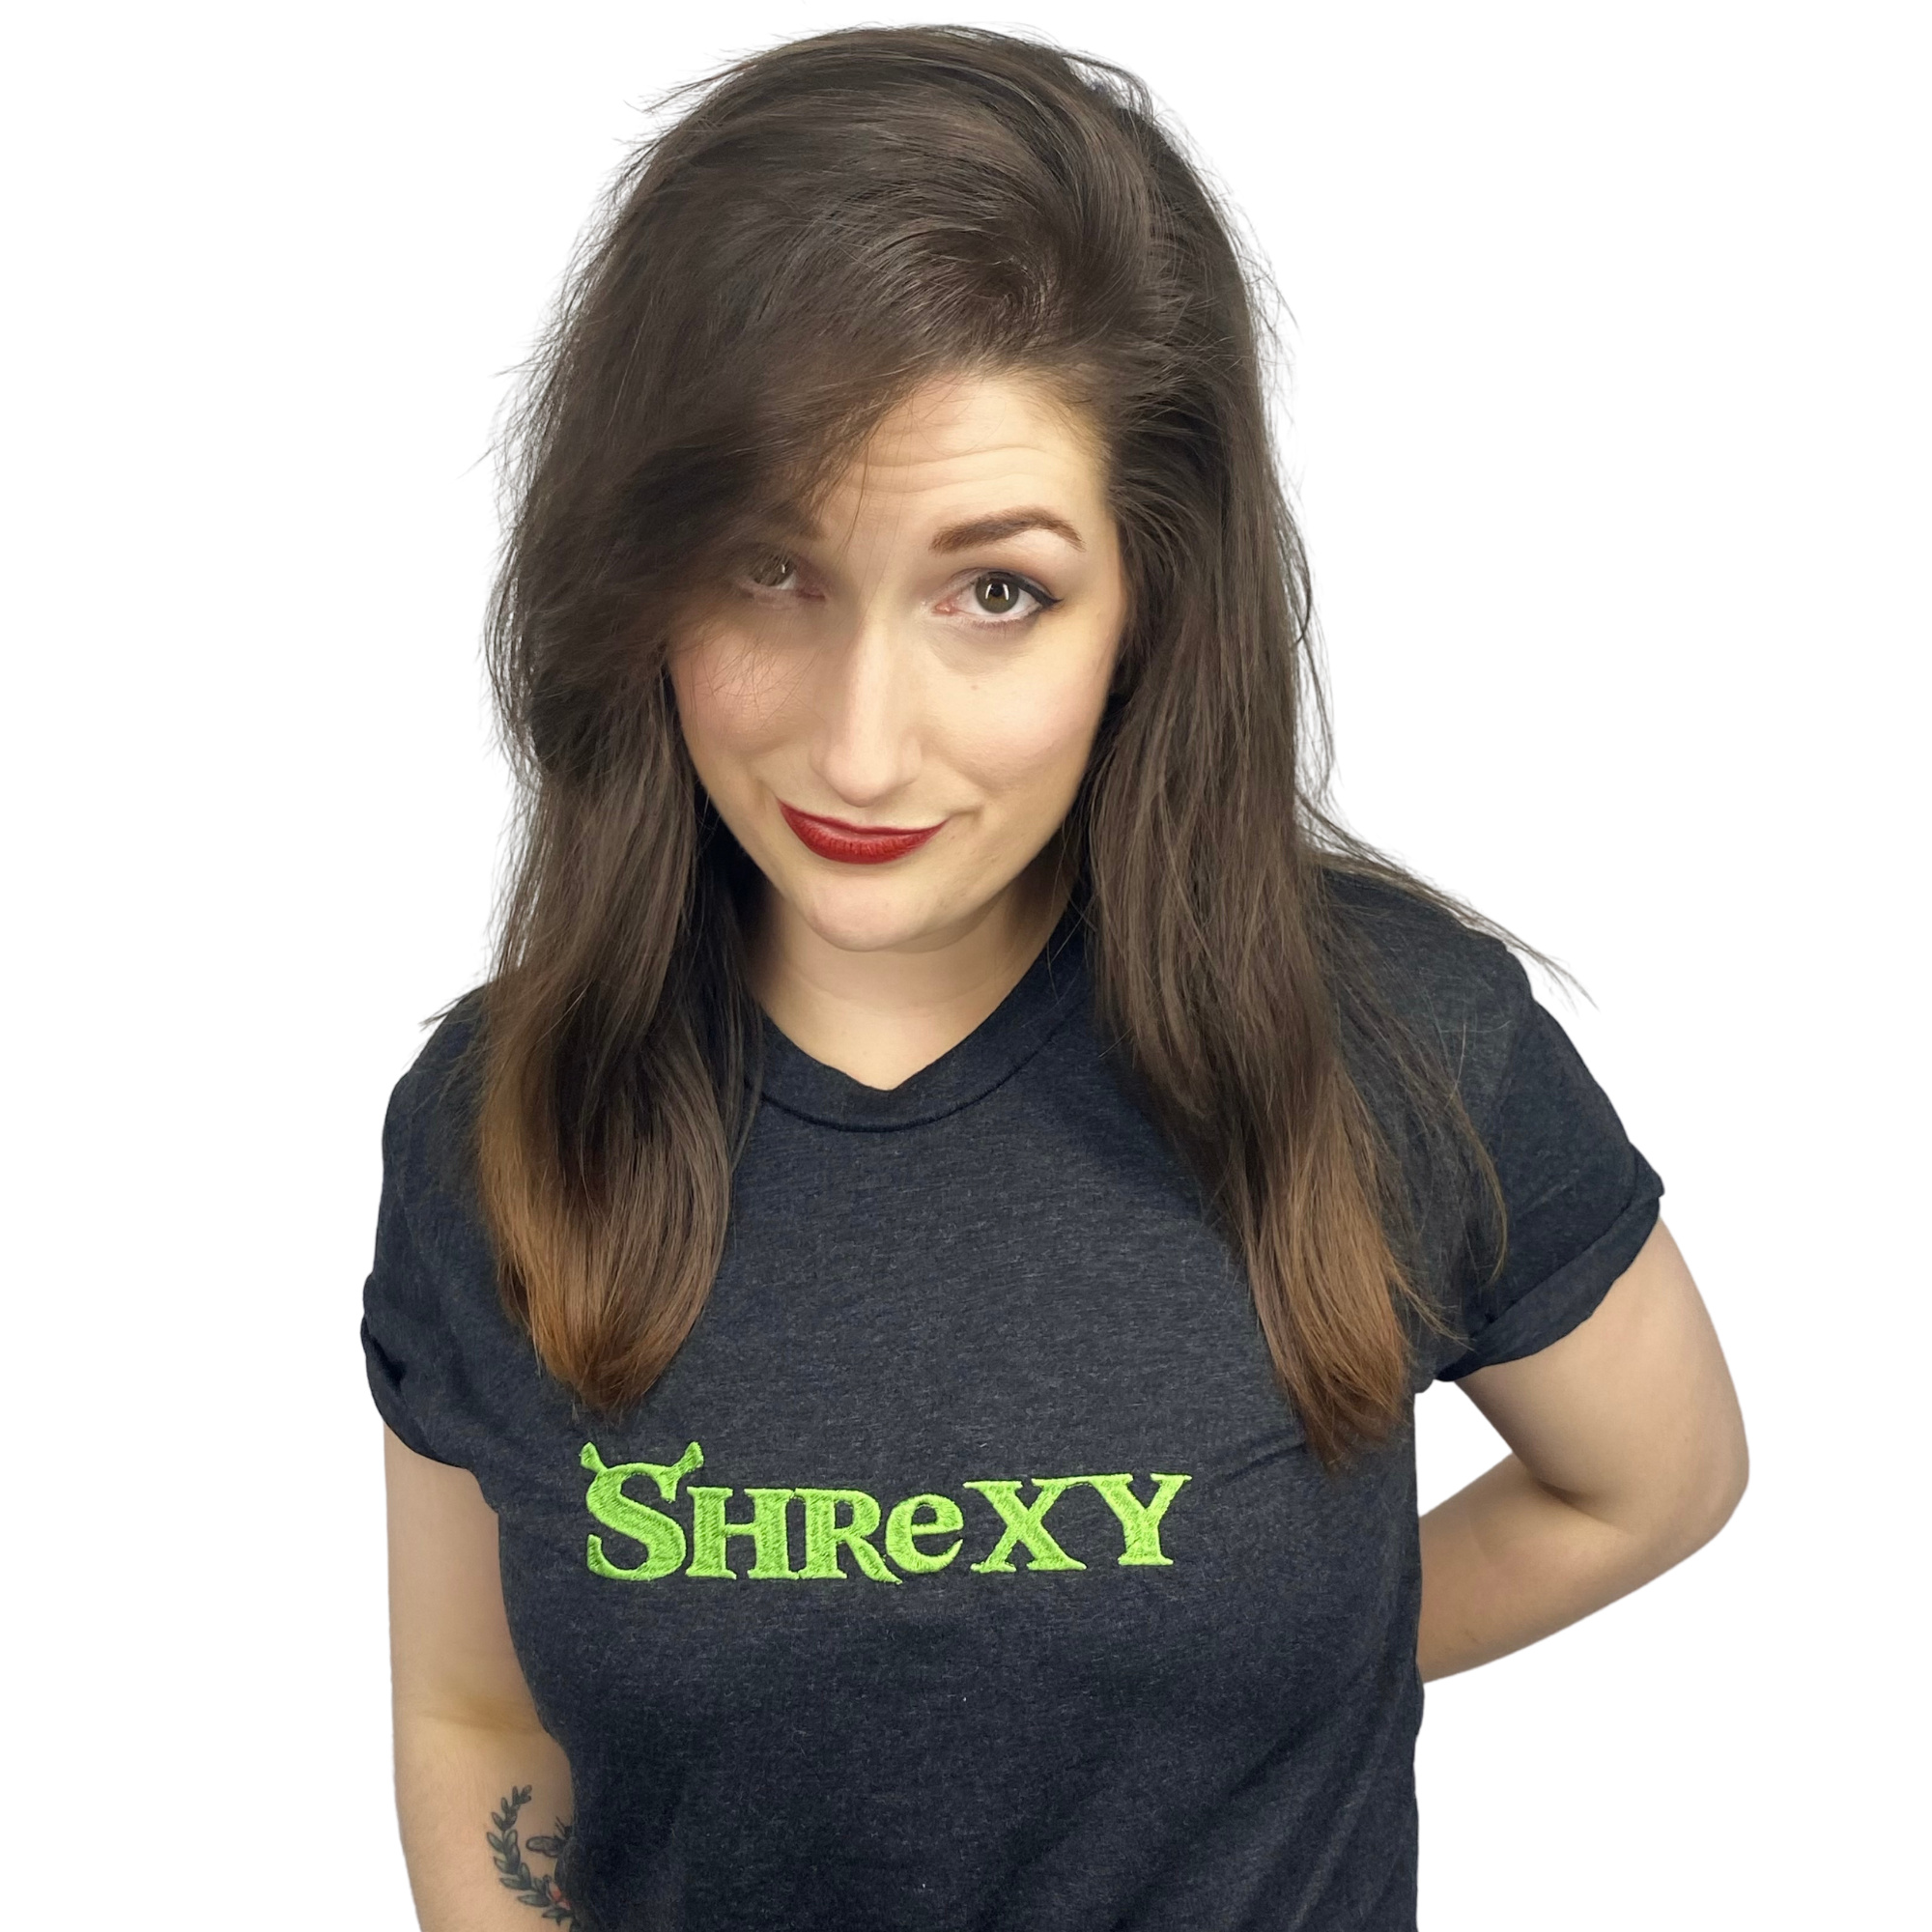 Shrexy Embroidered Black Meme Tee Shirt, Unisex